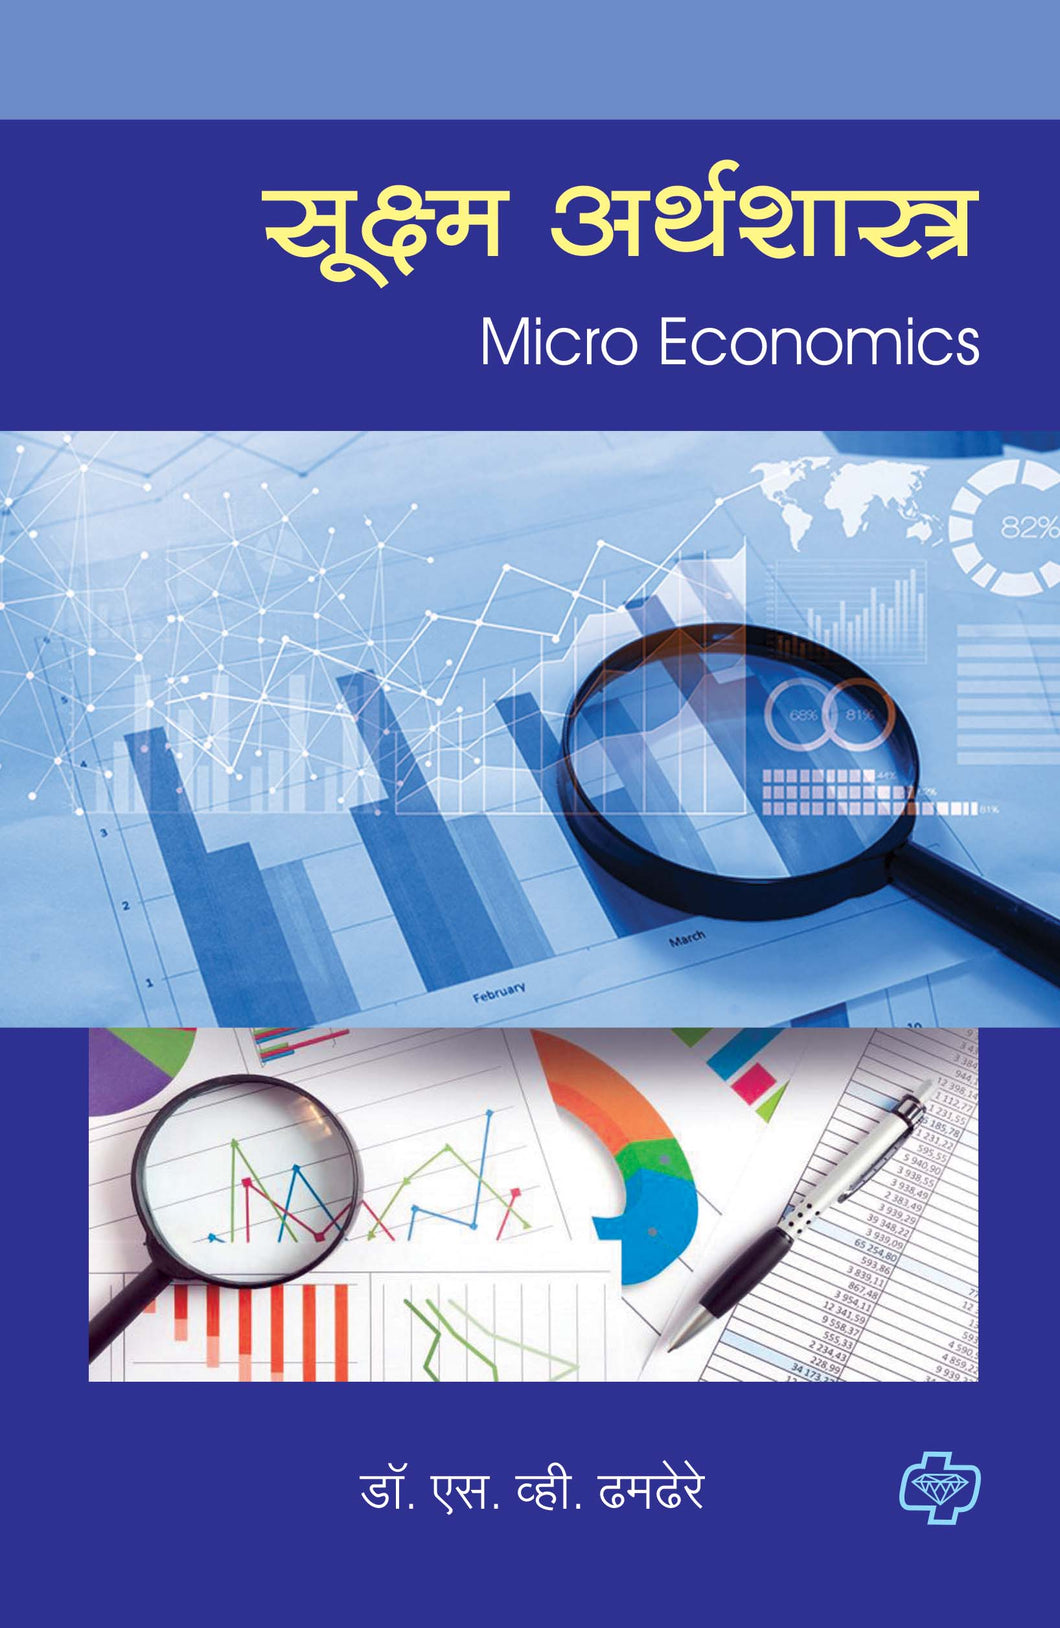 सूक्ष्म अर्थशास्त्र (Micro Economics) (सत्र ३ व ४ एकत्रित)